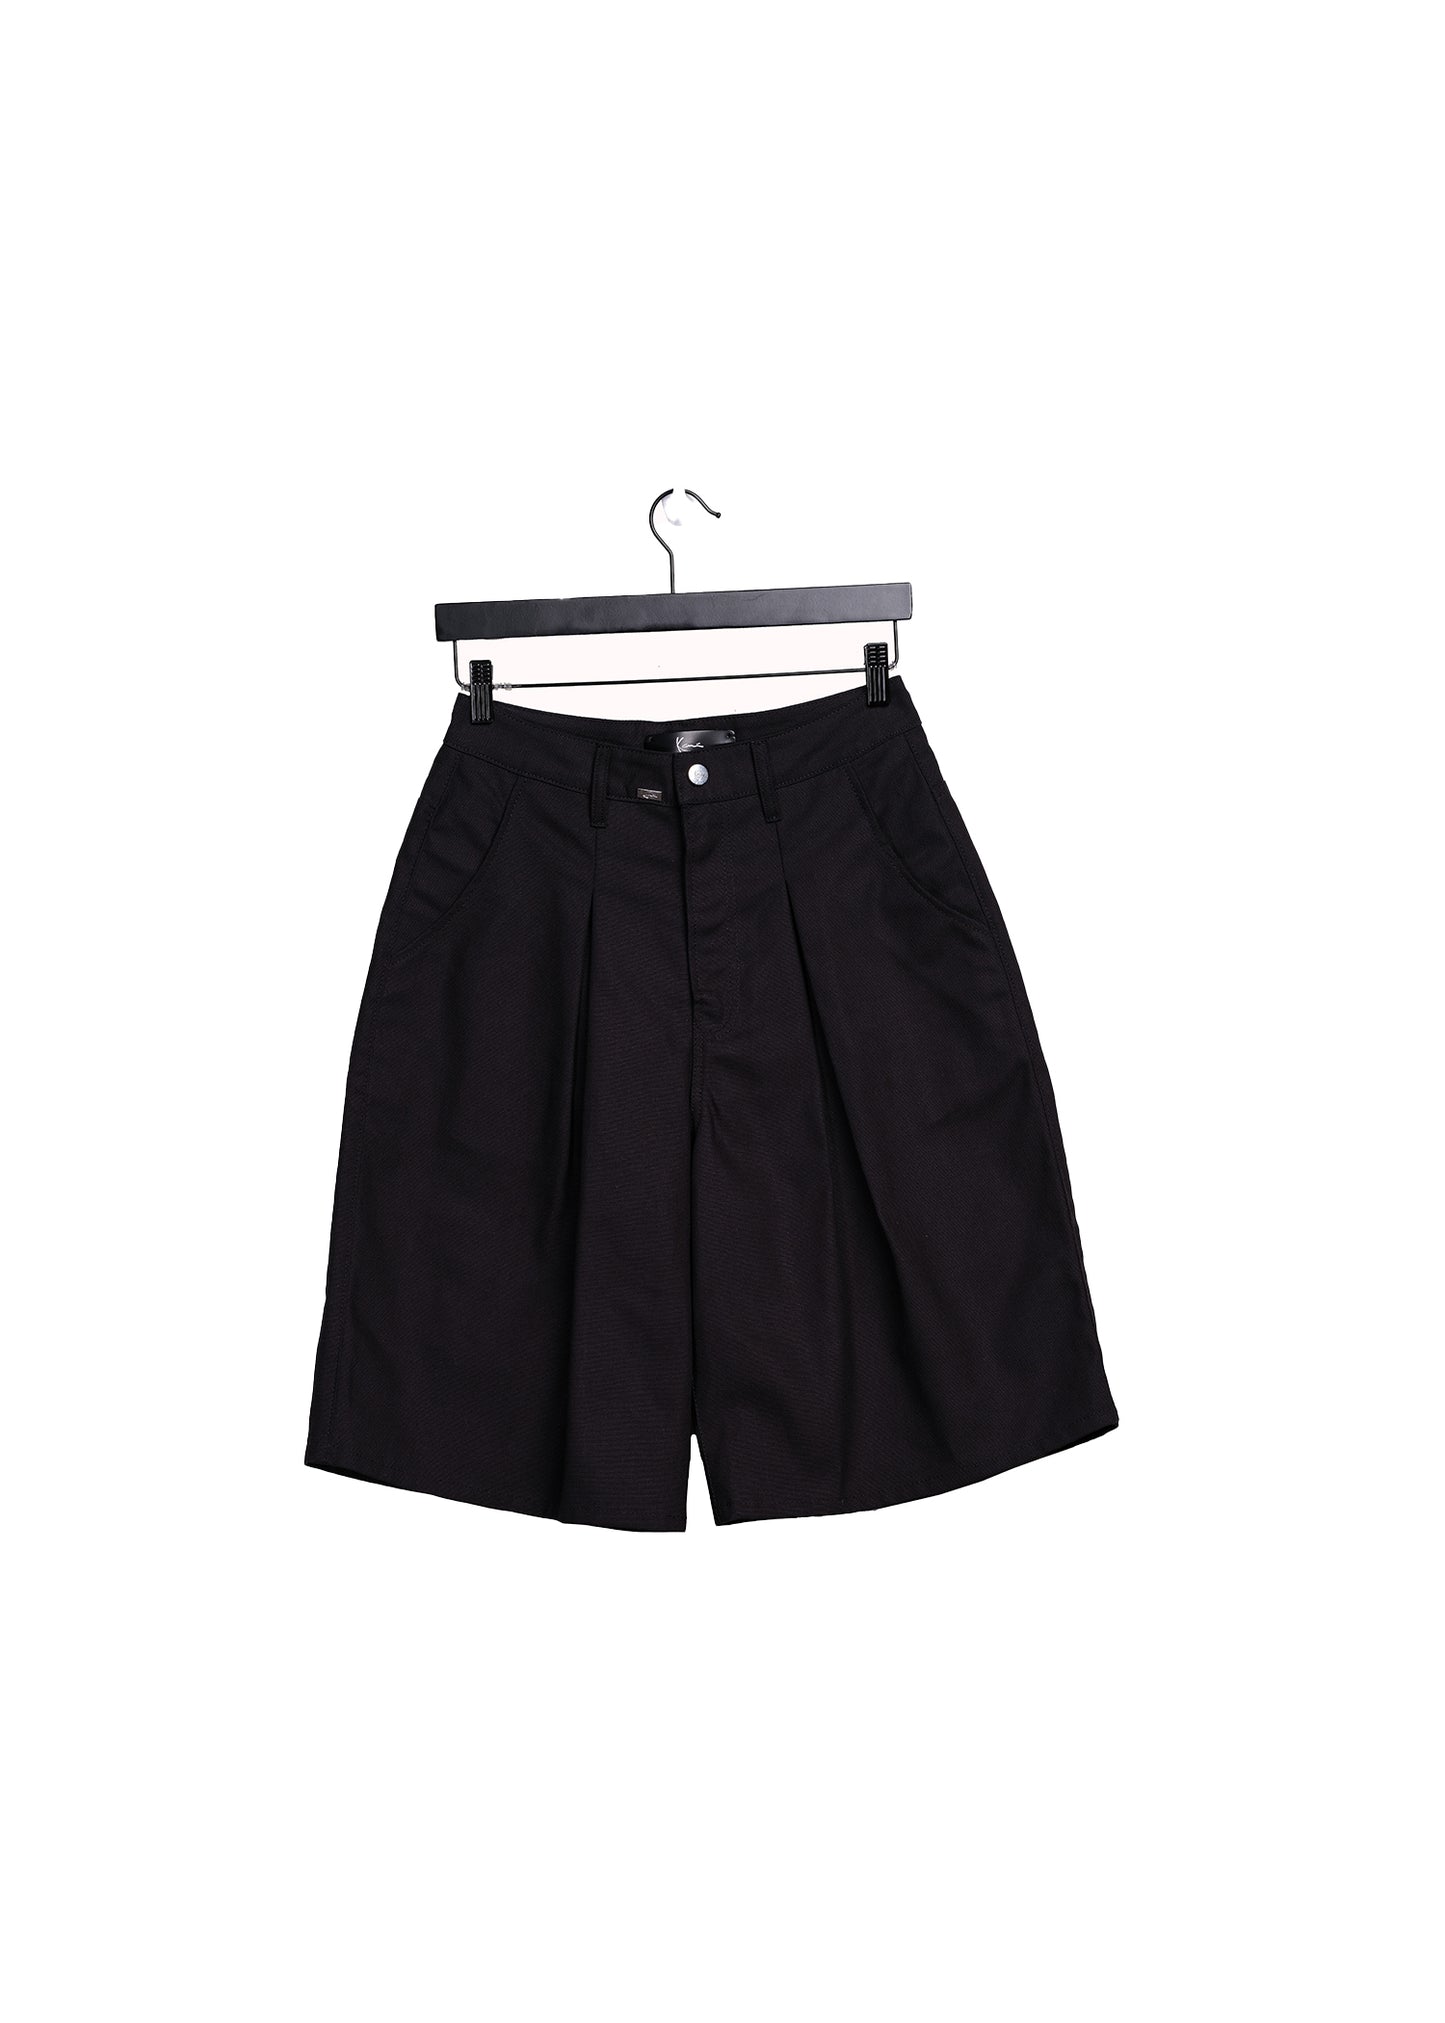 Scottish Shorts (Black)